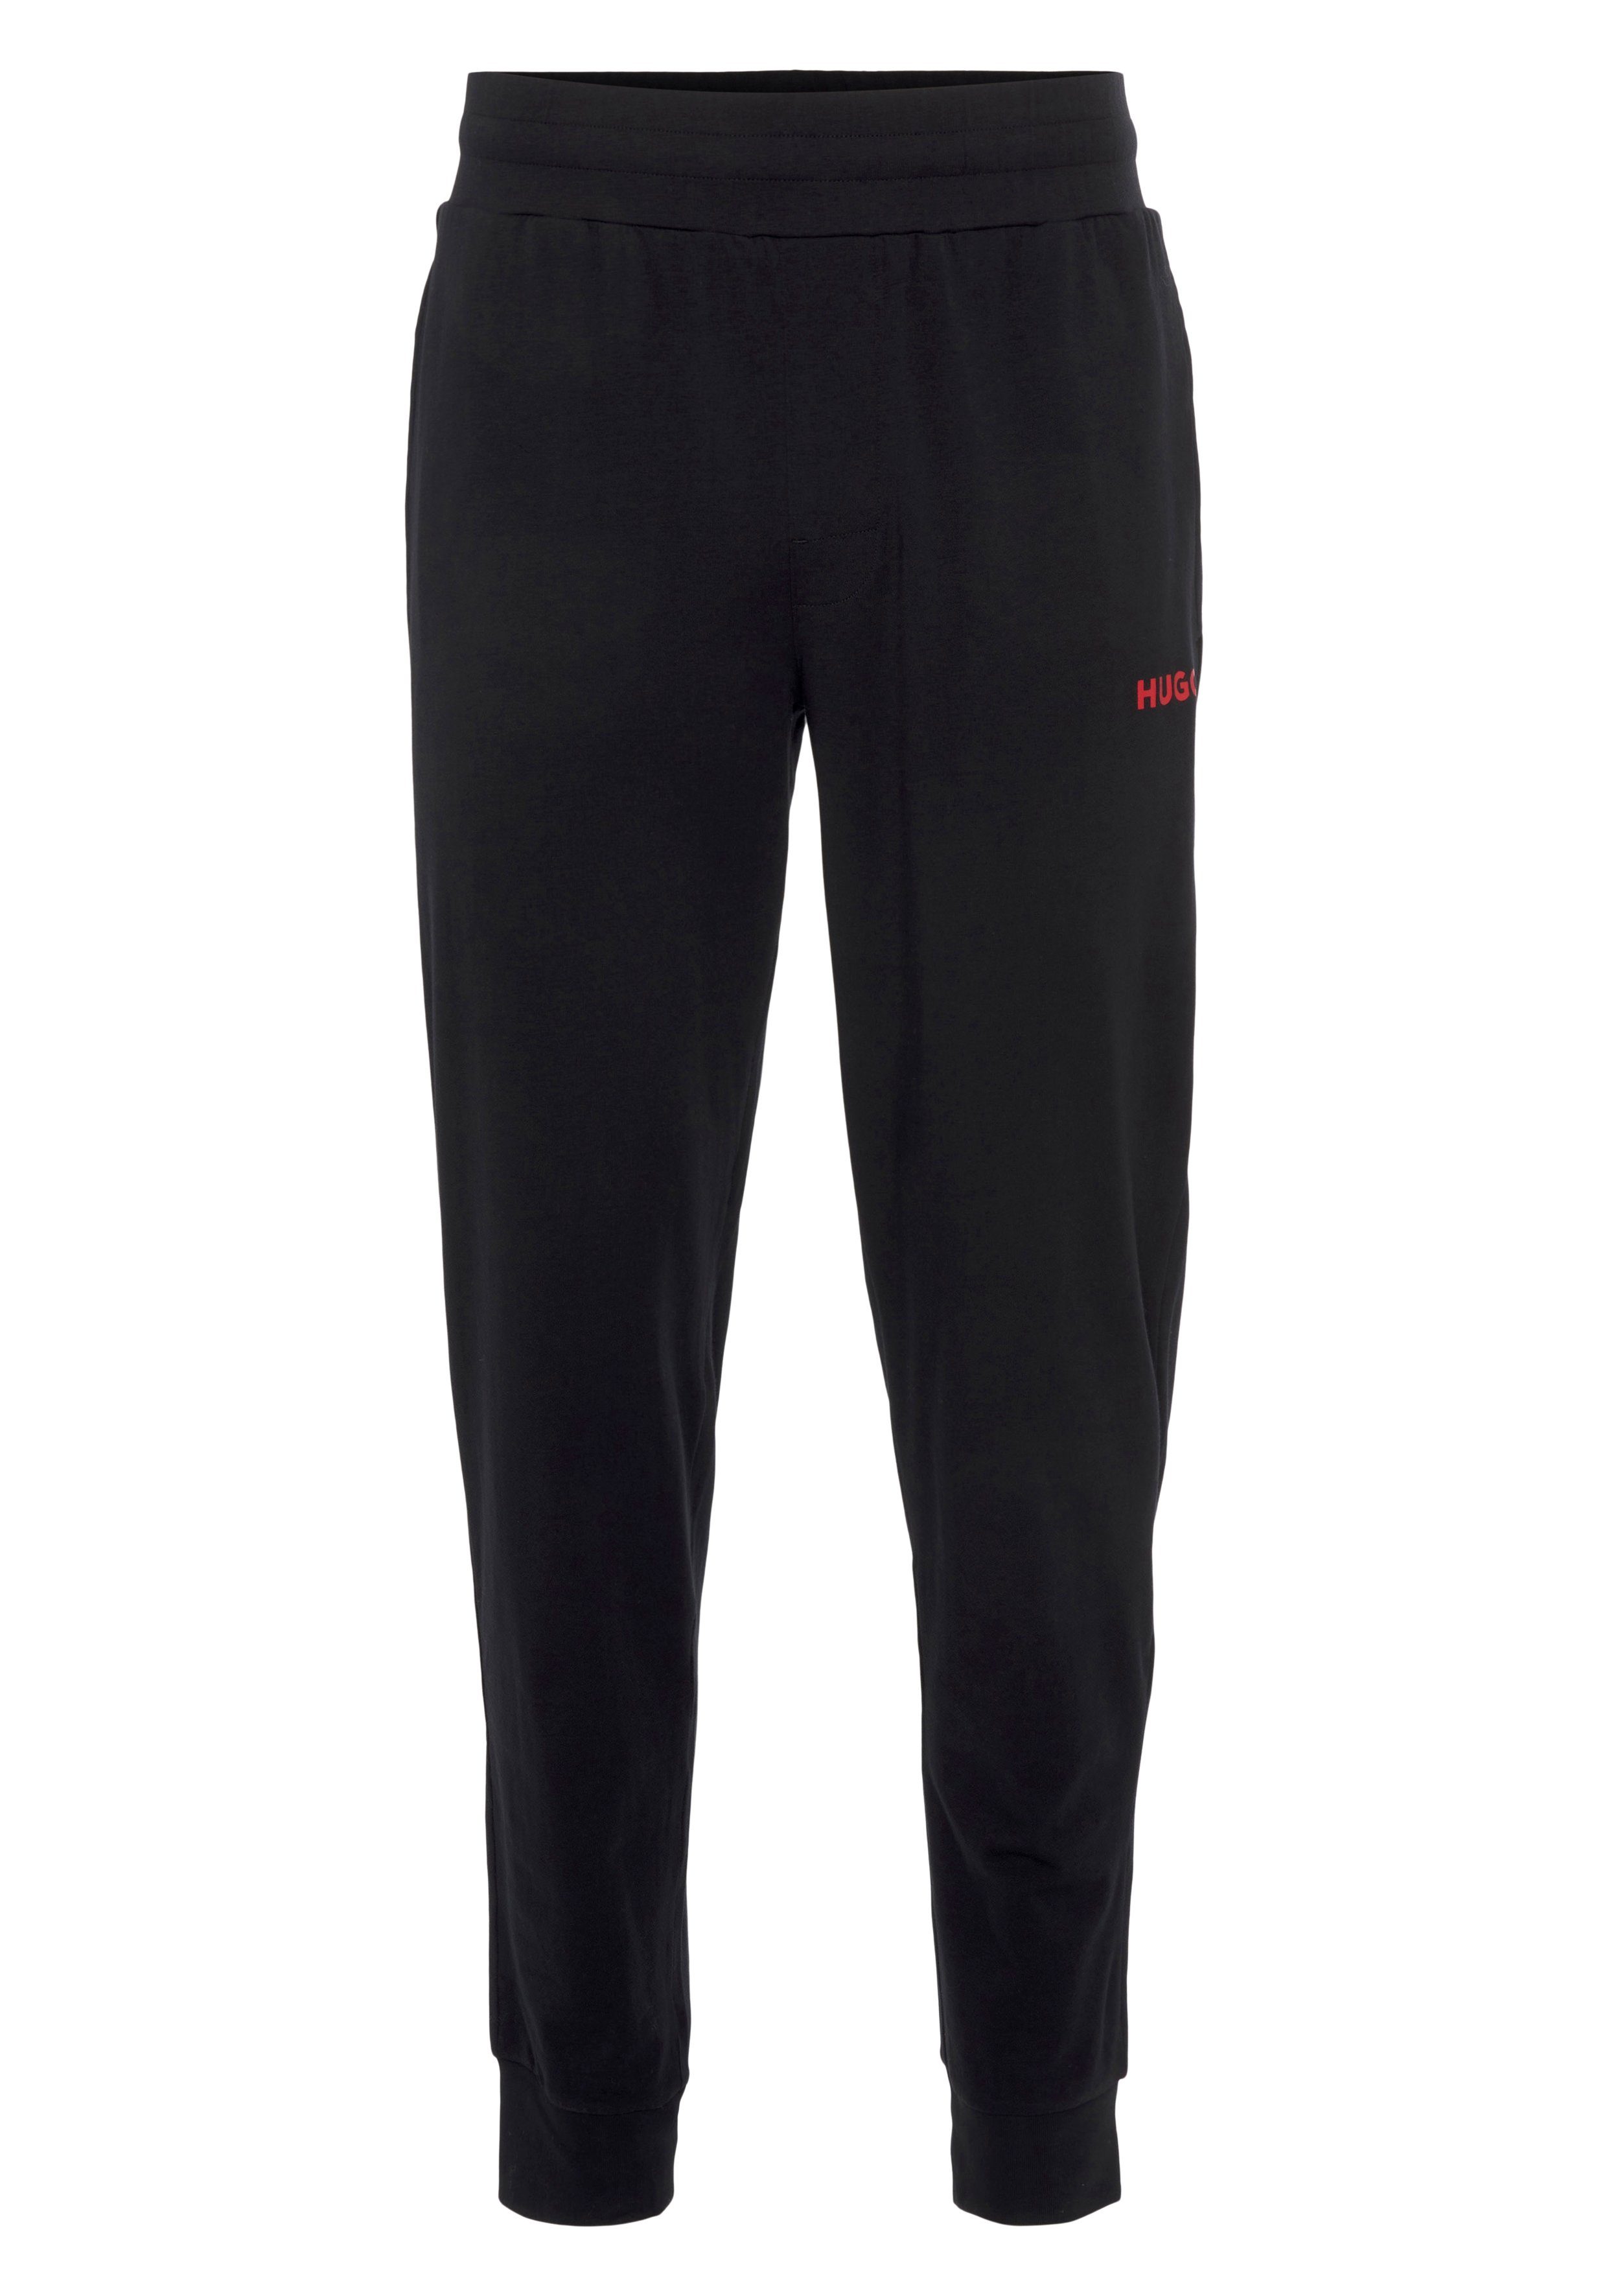 HUGO Sweathose Linked Pants CW mit HUGO Logodruck Black | Jogginghosen